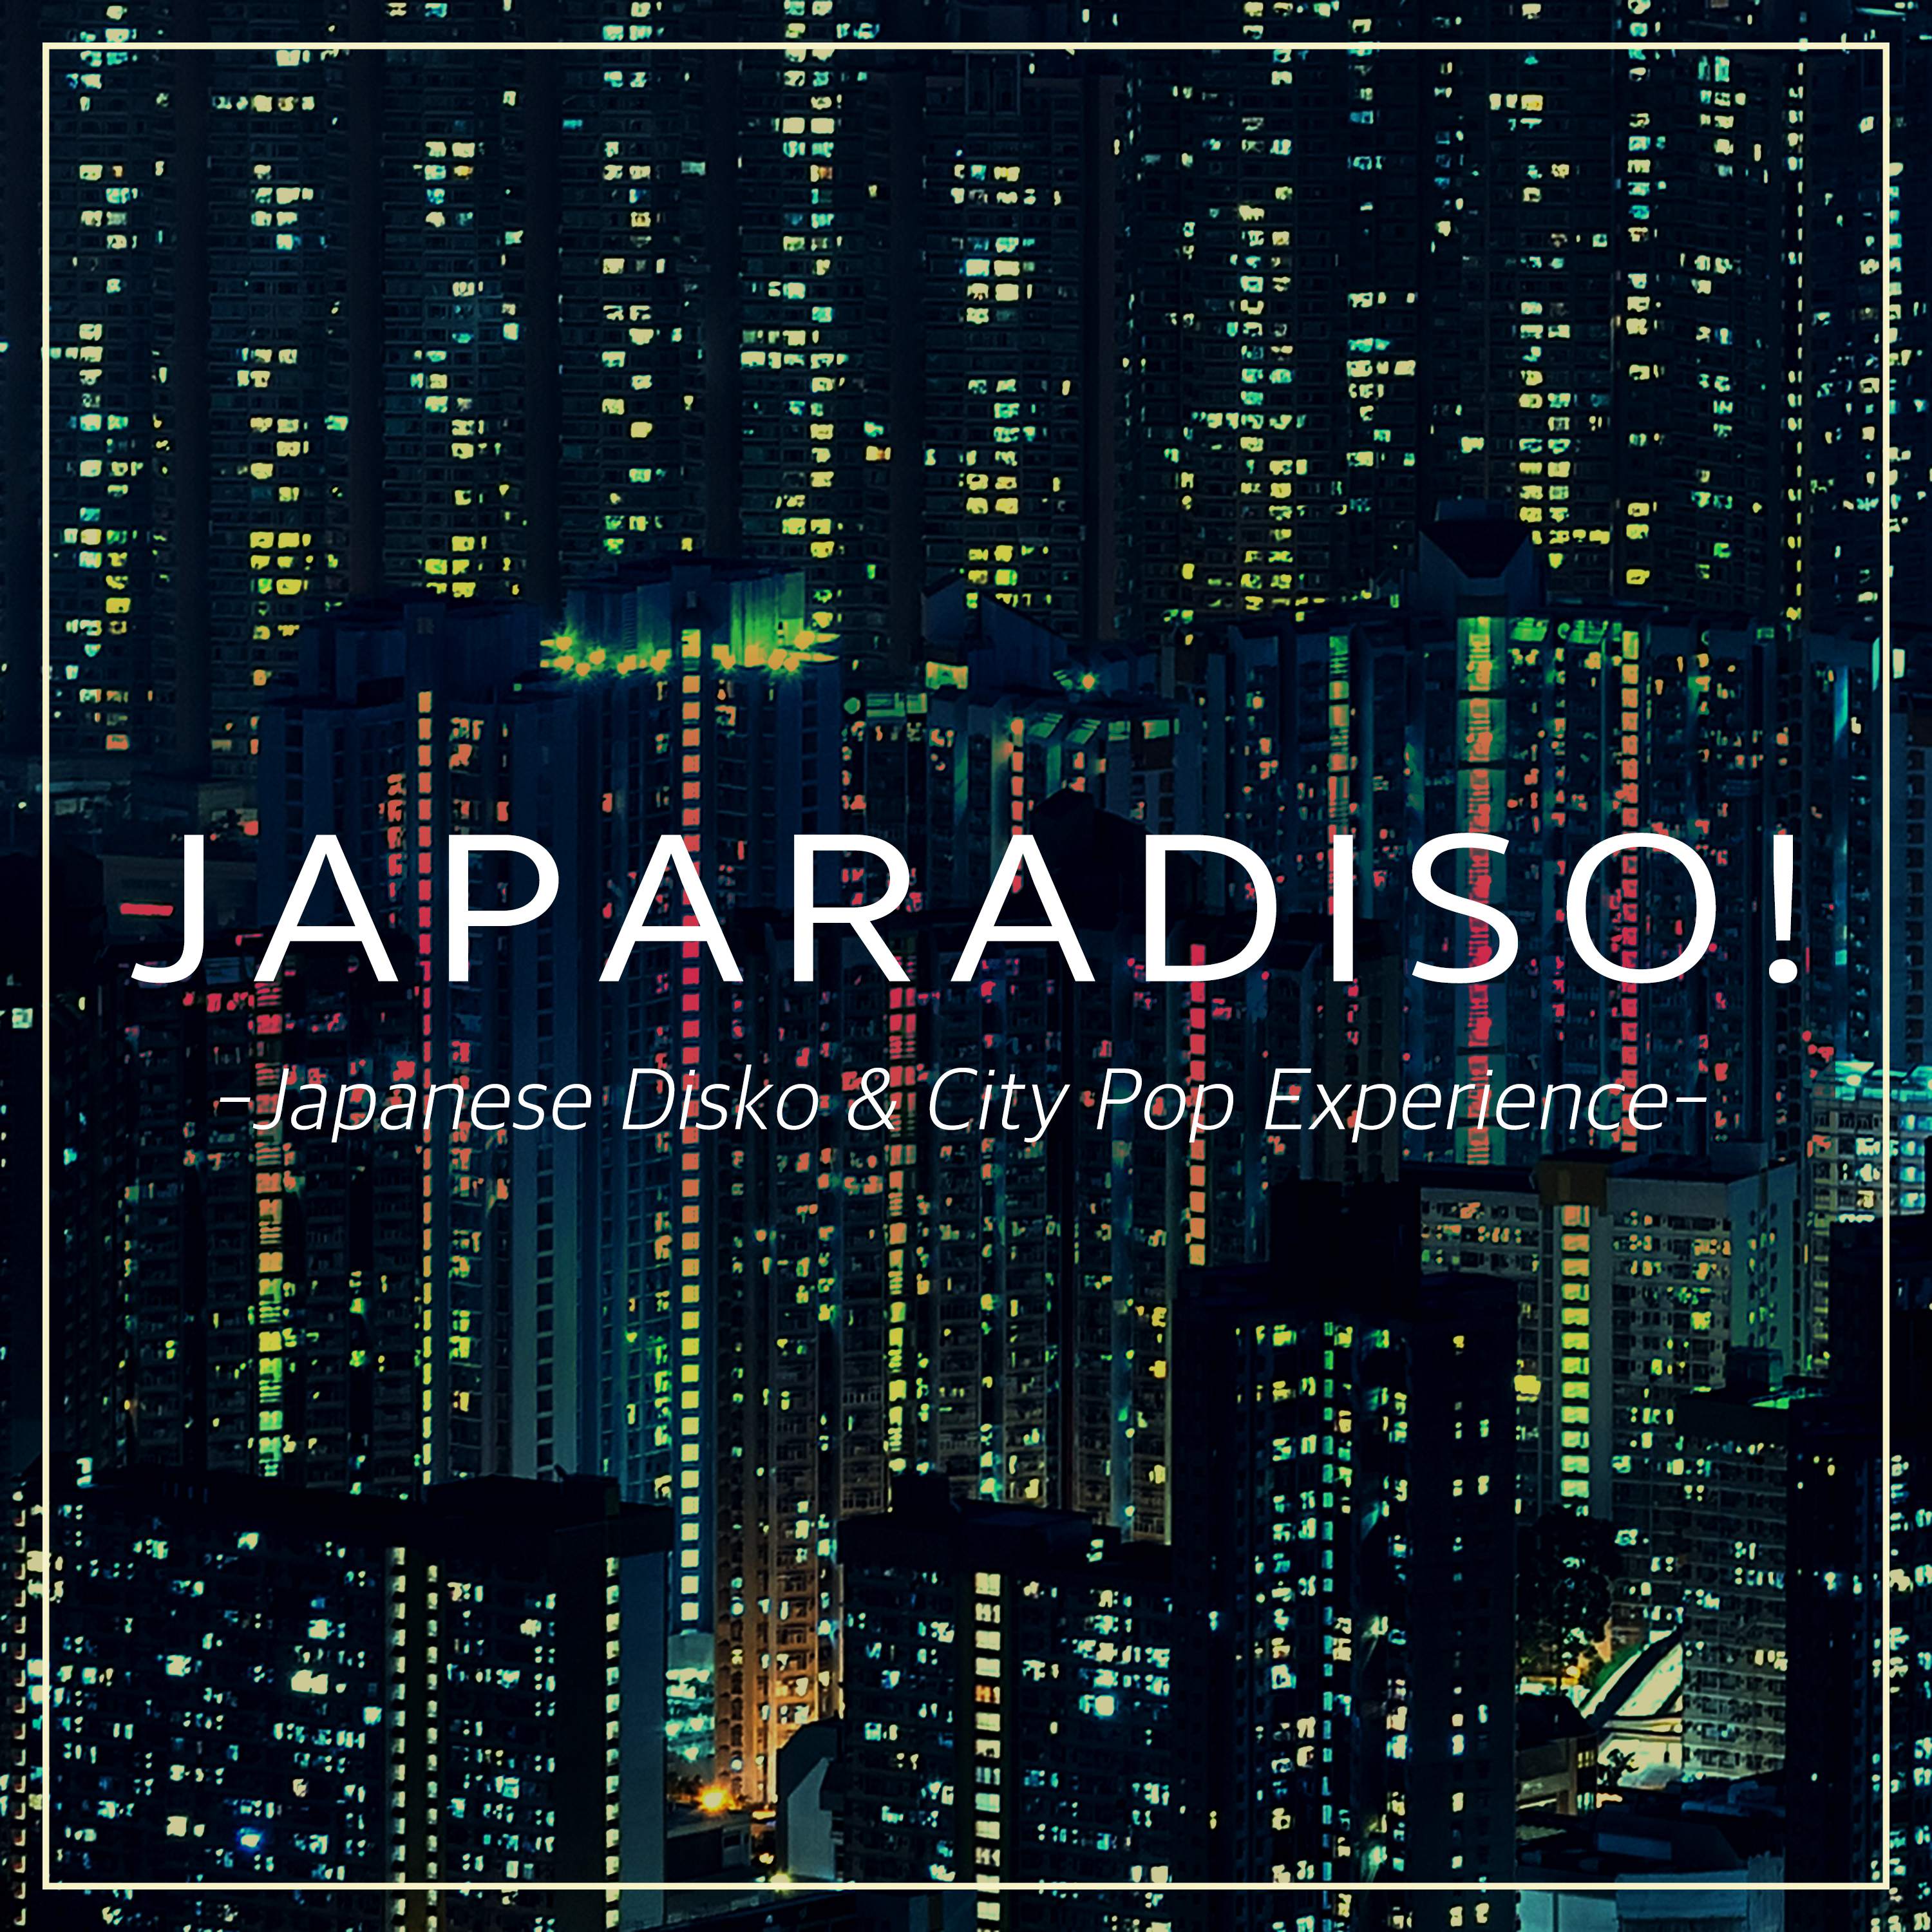 Japaradiso! -Japanese Disko & City Pop Experience- - フライヤー表